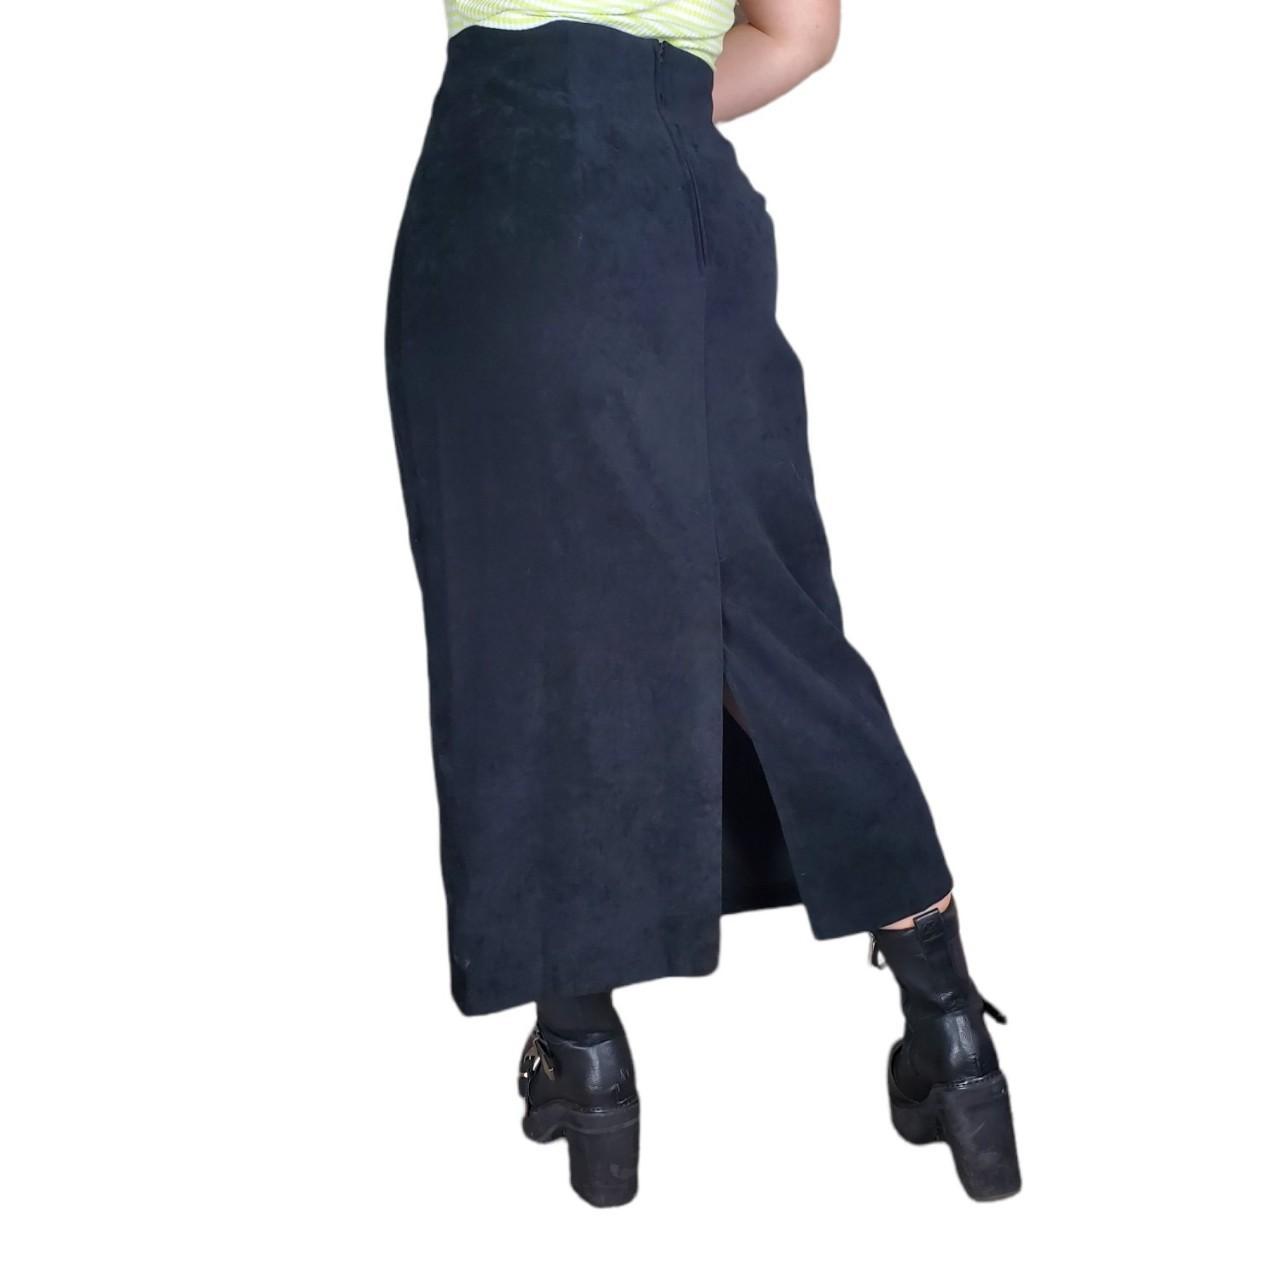 Product Image 3 - 90's black midi skirt 
-Size